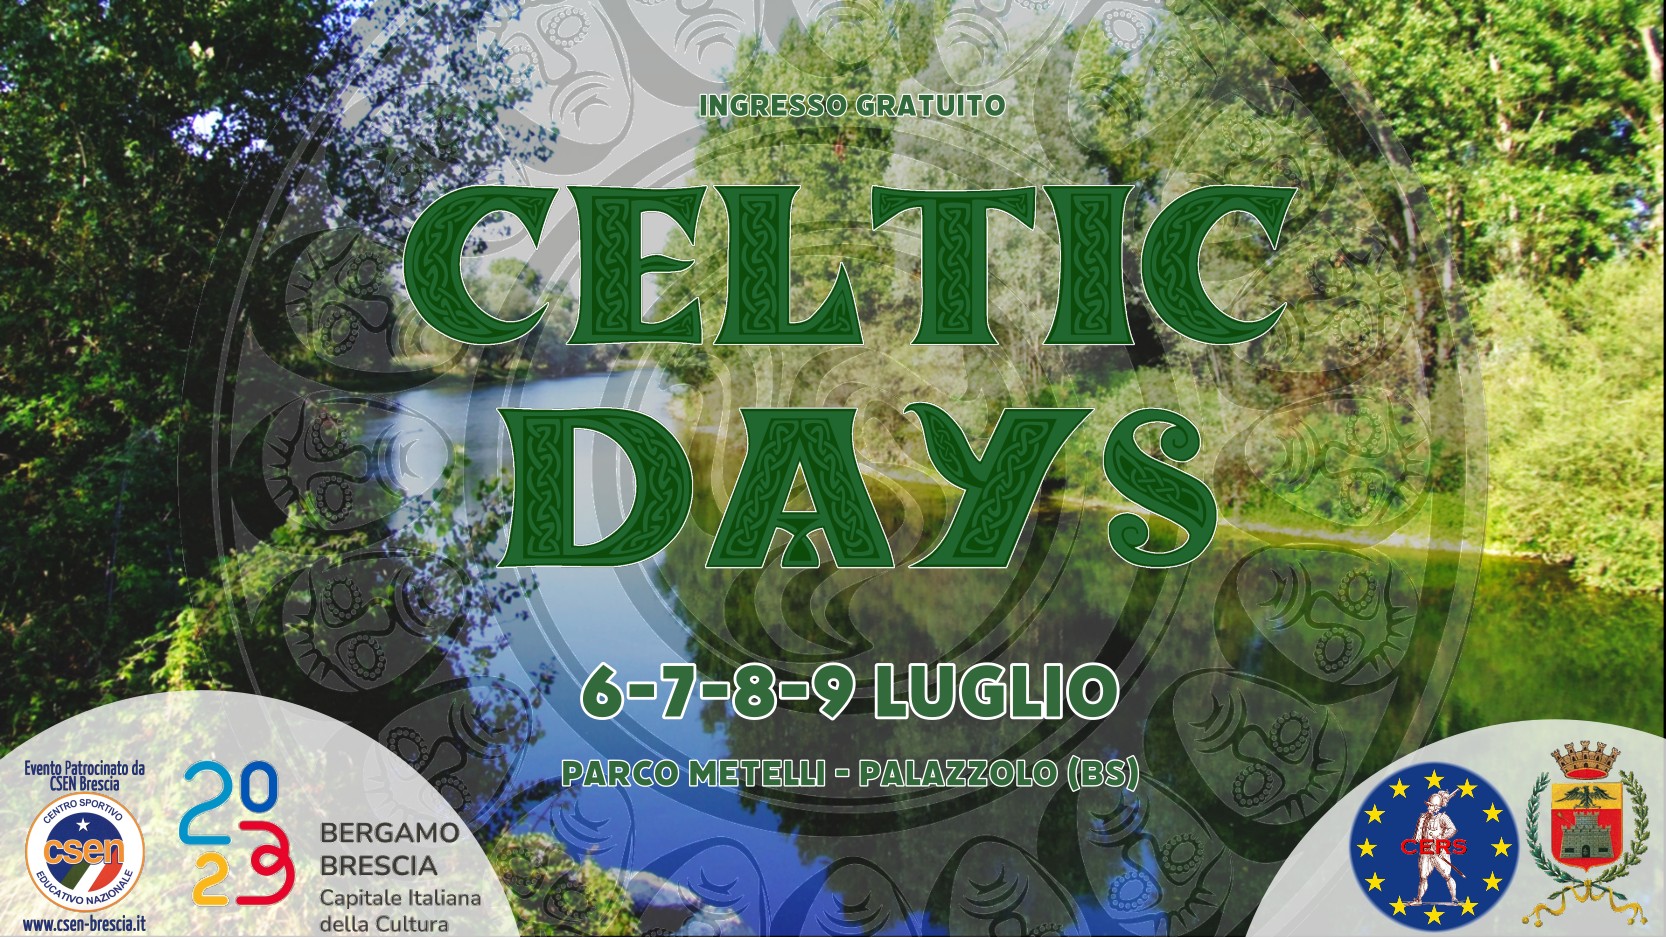 Palazzolo S/O fino a domenica proseguono i Celtic Days